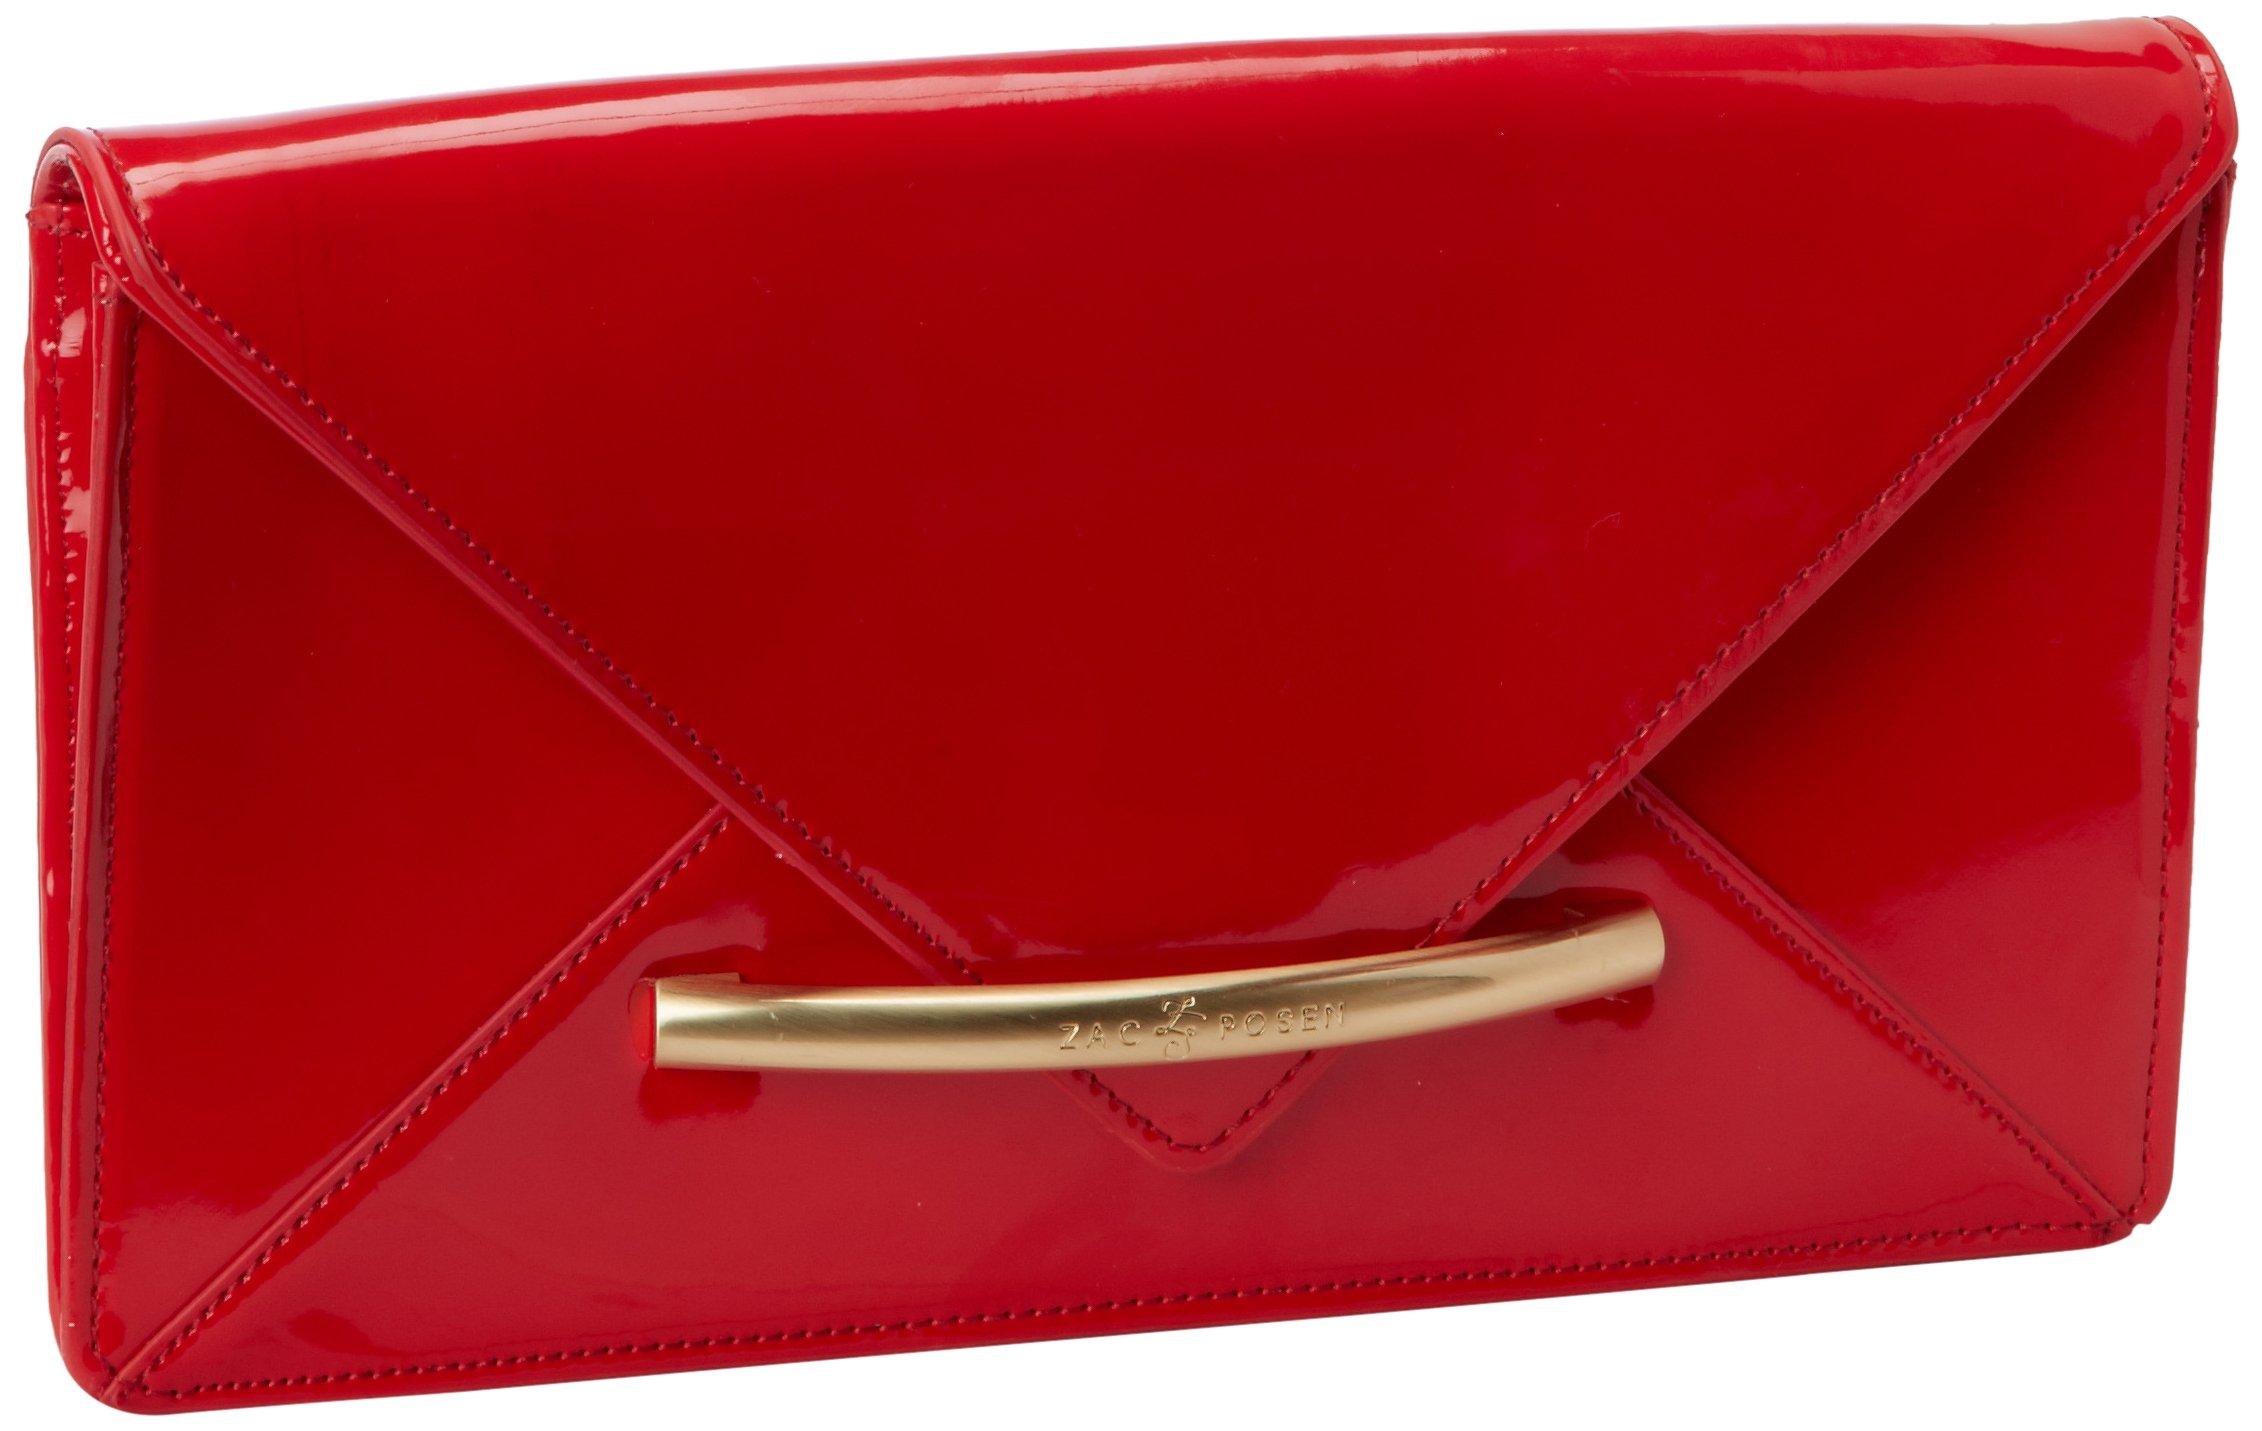 Zac Zac Posen Earthette Double Compartment Bag - Red for Women